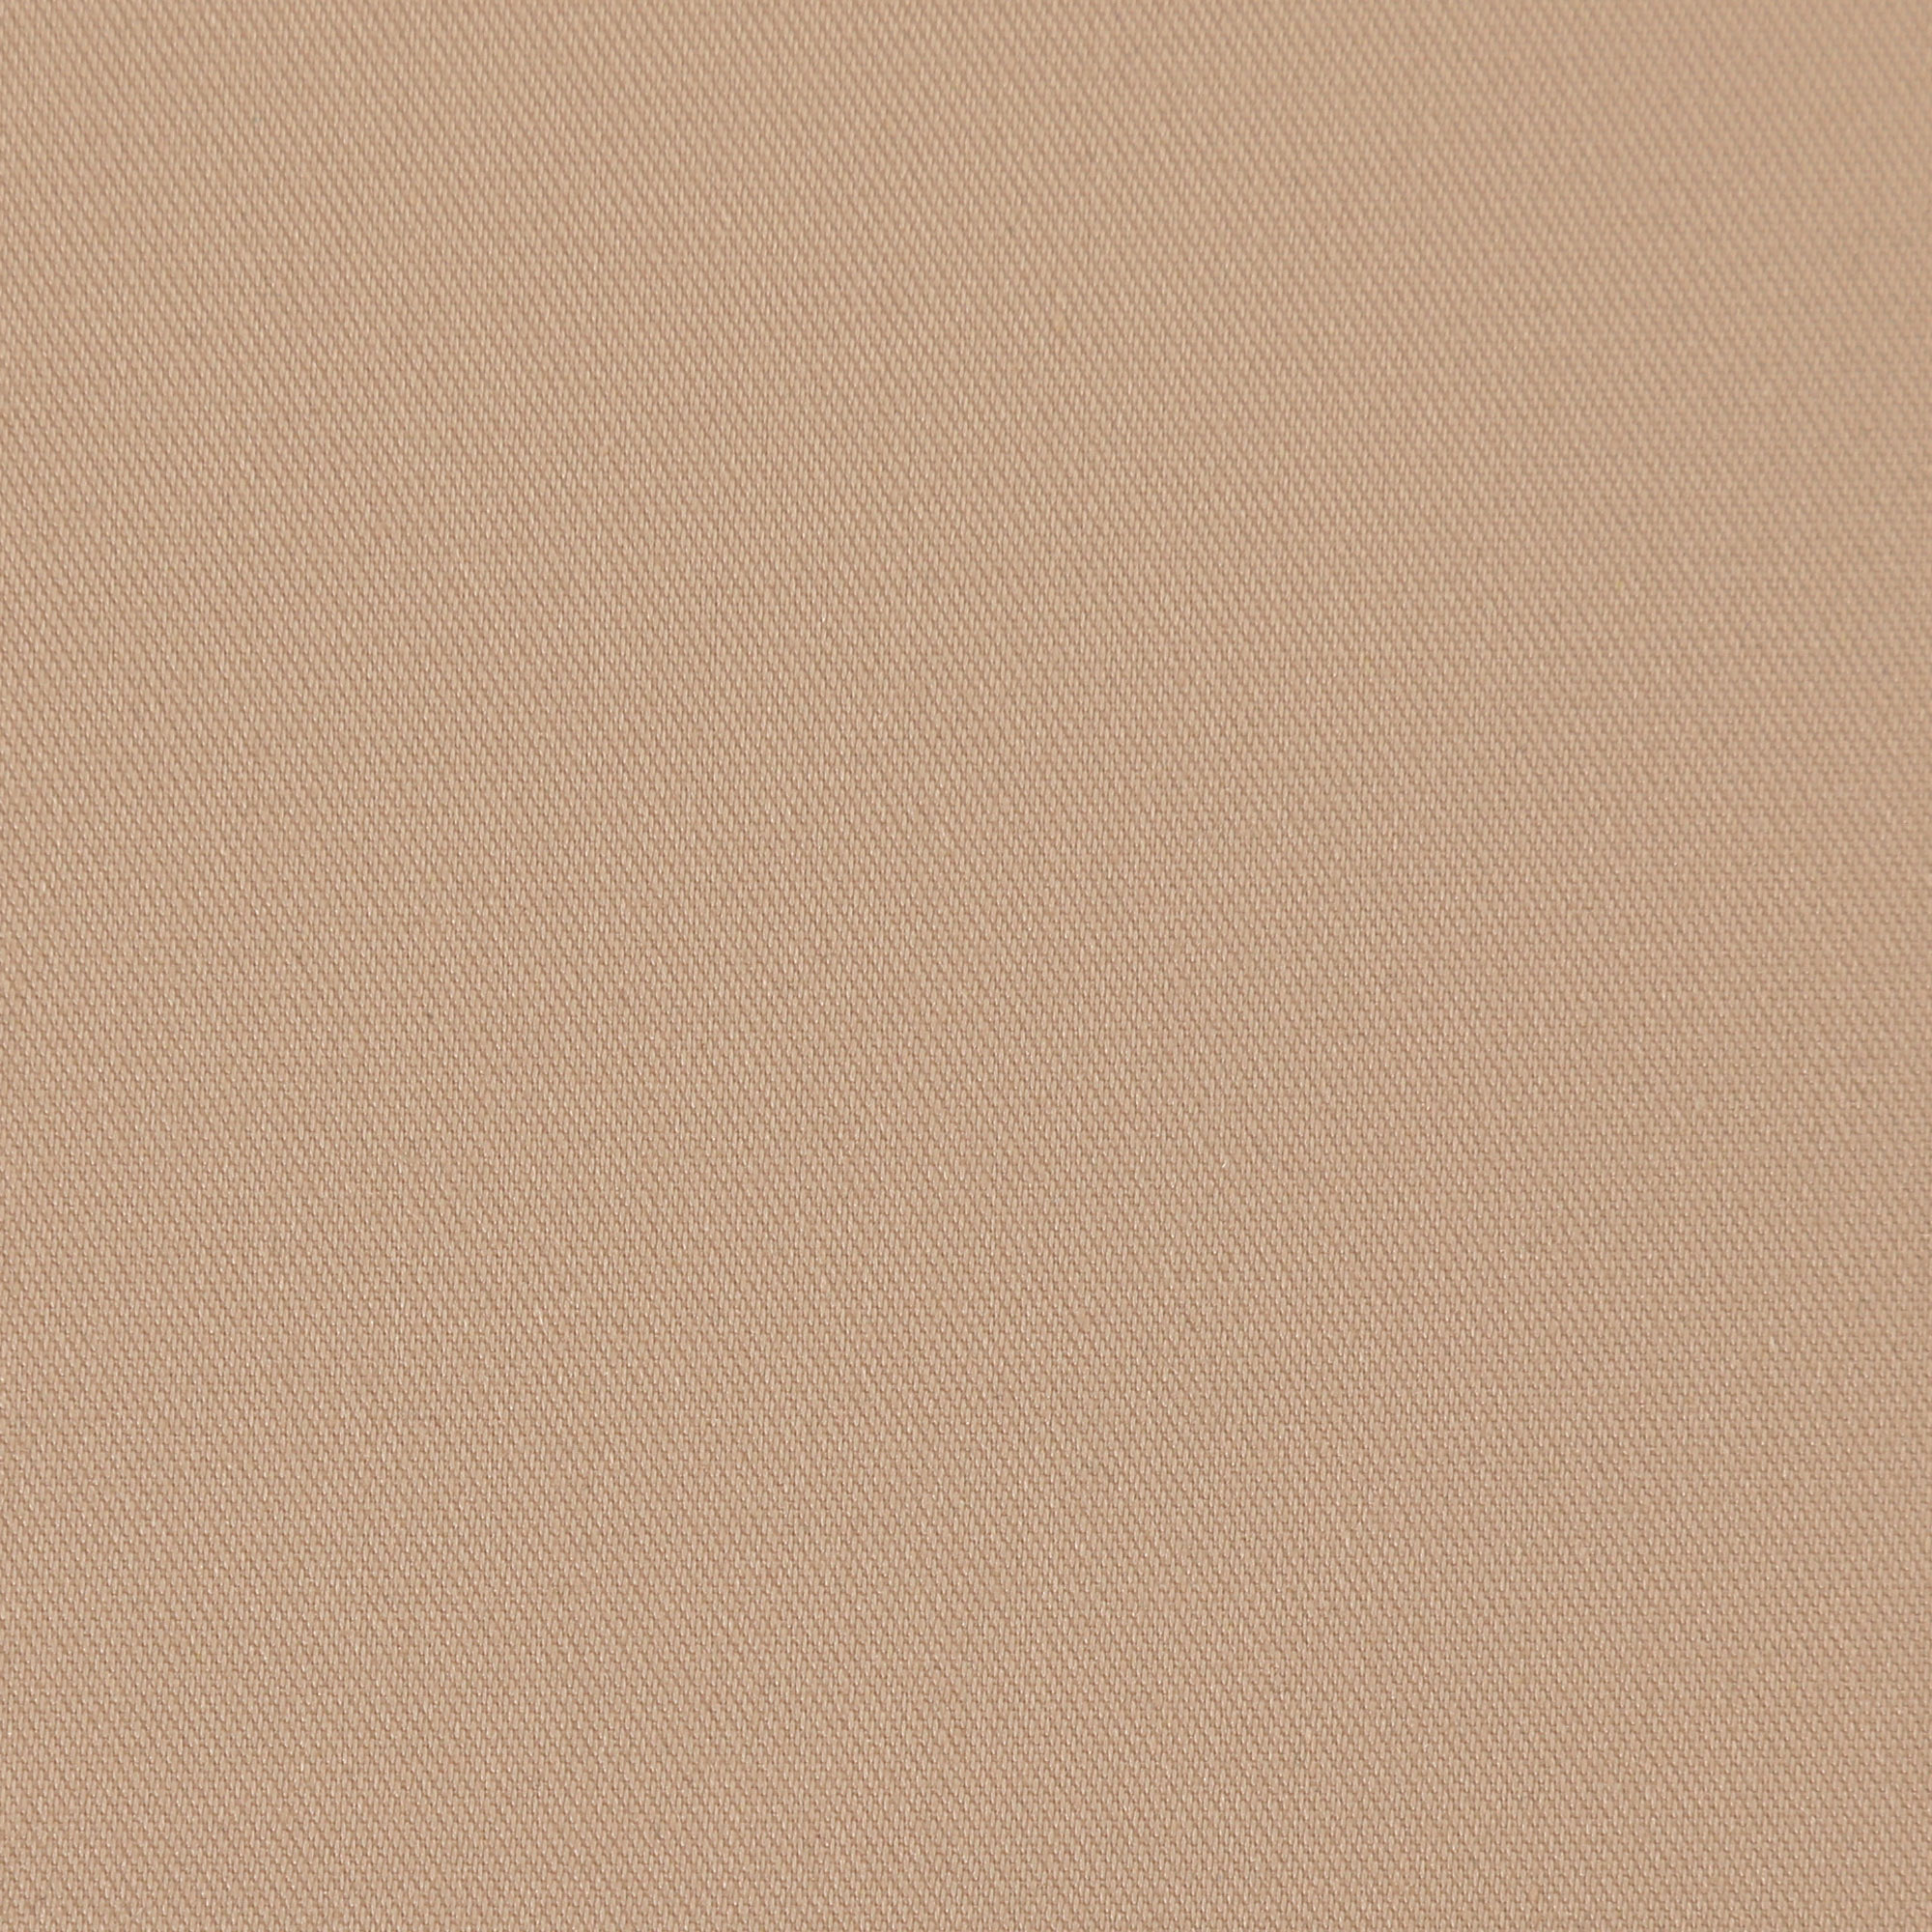 Комплект мебели Rattan grand San Marino medium brown 3 предмета, цвет коричневый, размер 60х67х70 см - фото 14